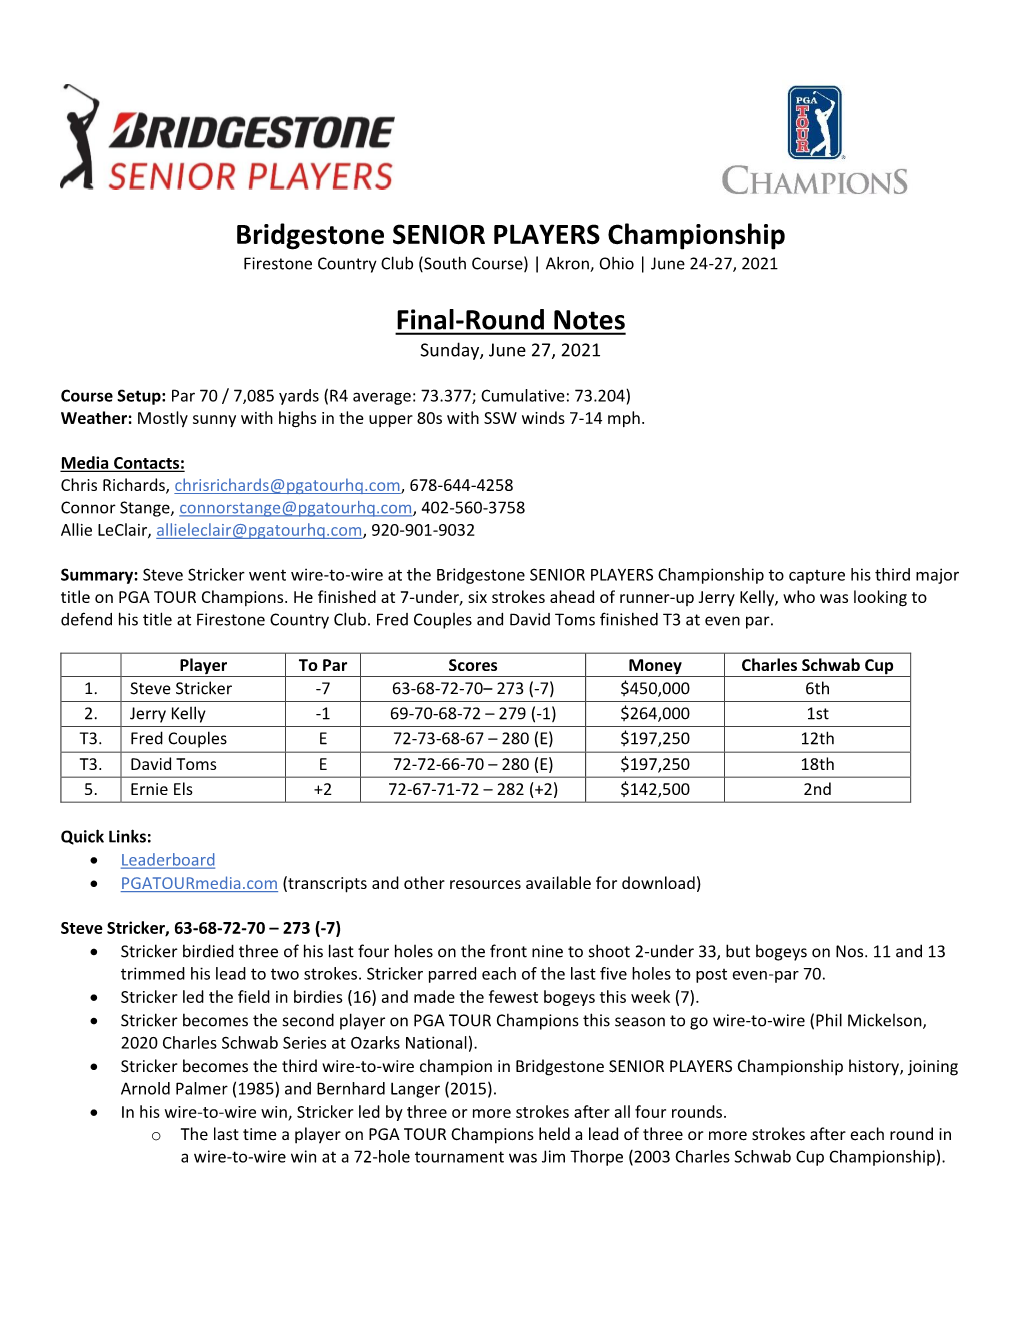 Bridgestone SENIOR PLAYERS Championship Final-Round Notes